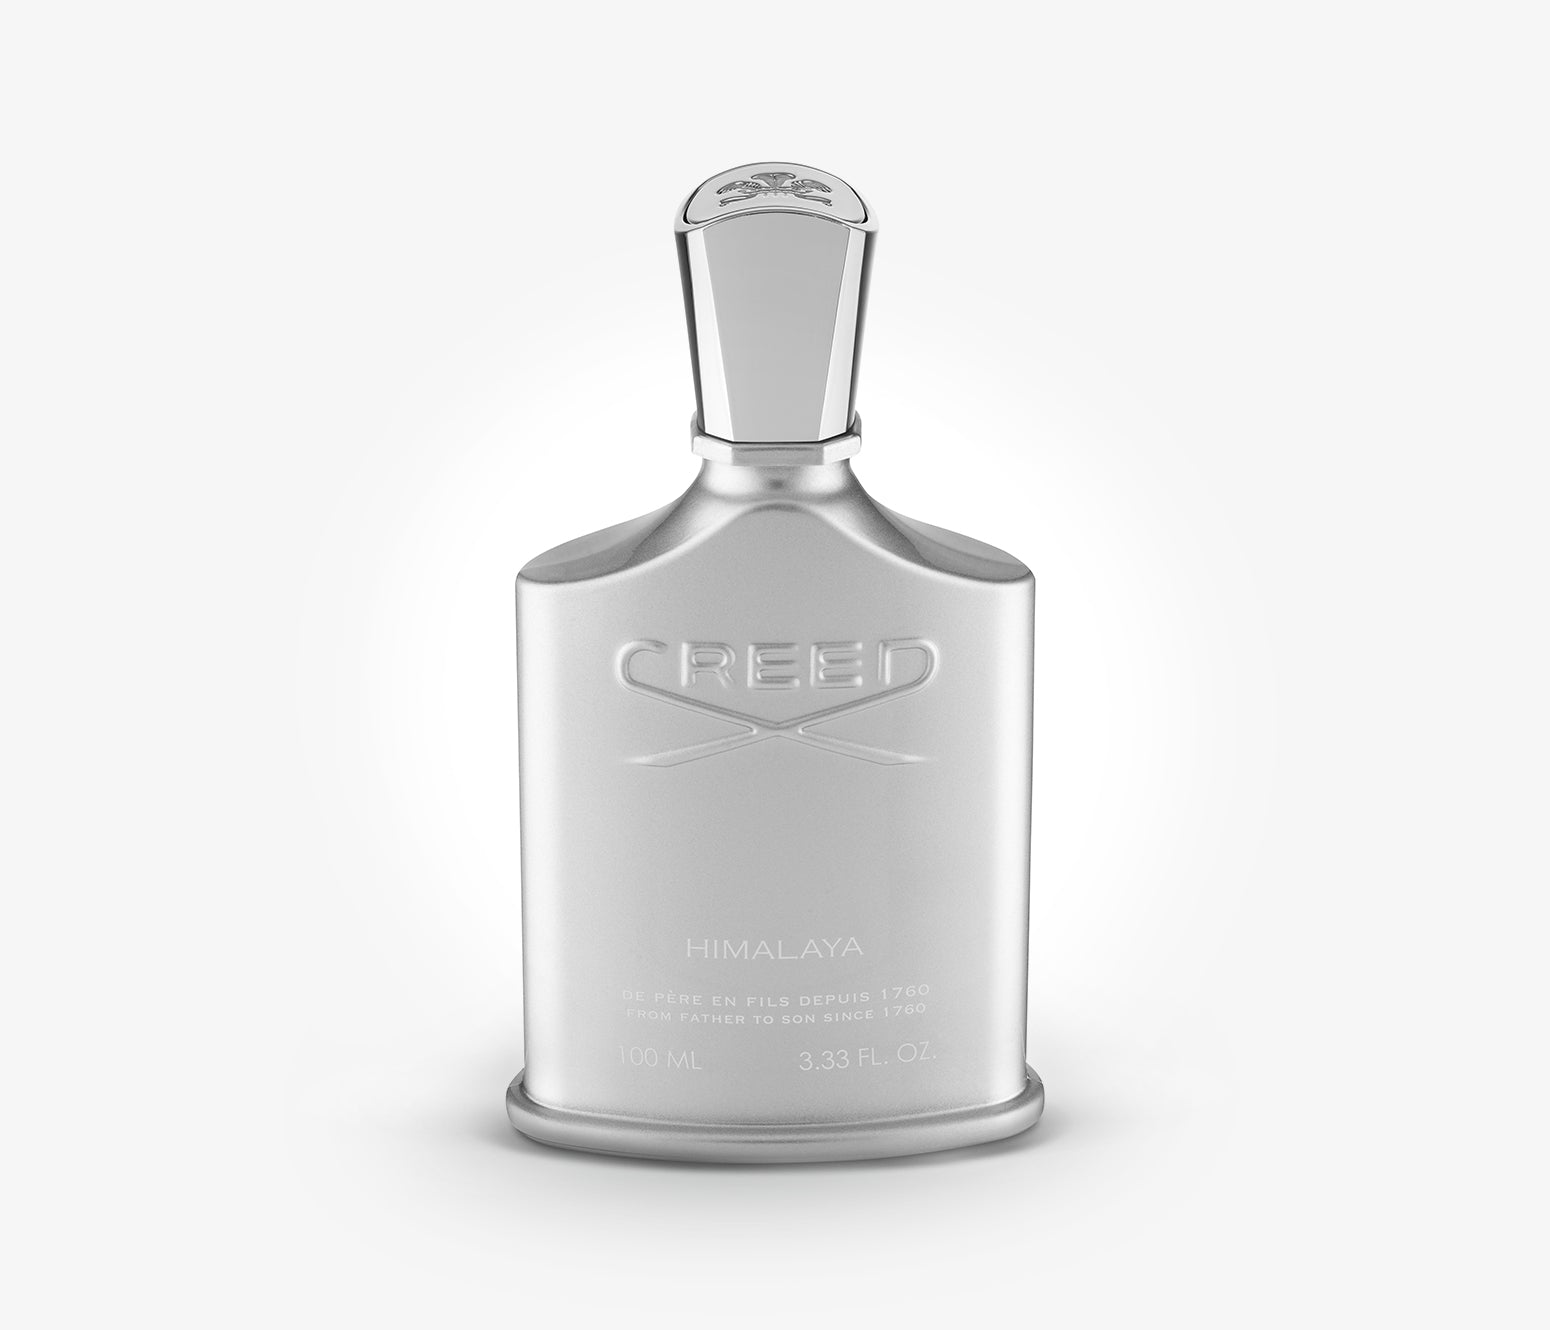 Creed - Himalaya - 100ml - AIM001 - Product Image - Fragrance - Les Senteurs